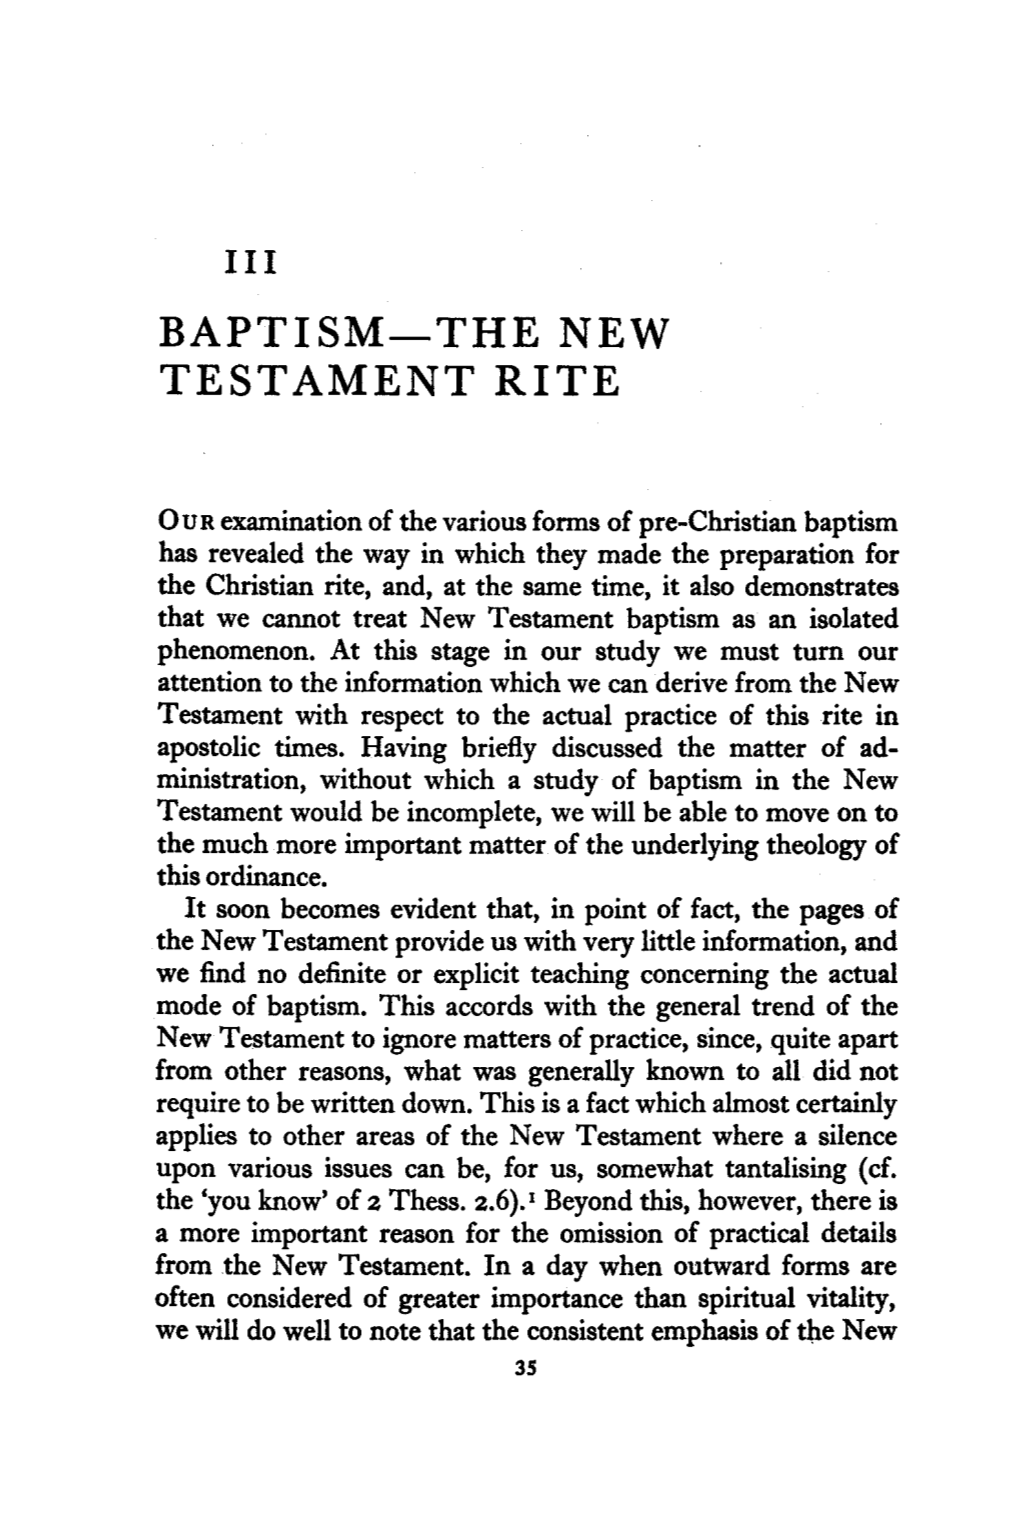 Baptism-The New Testament Rite